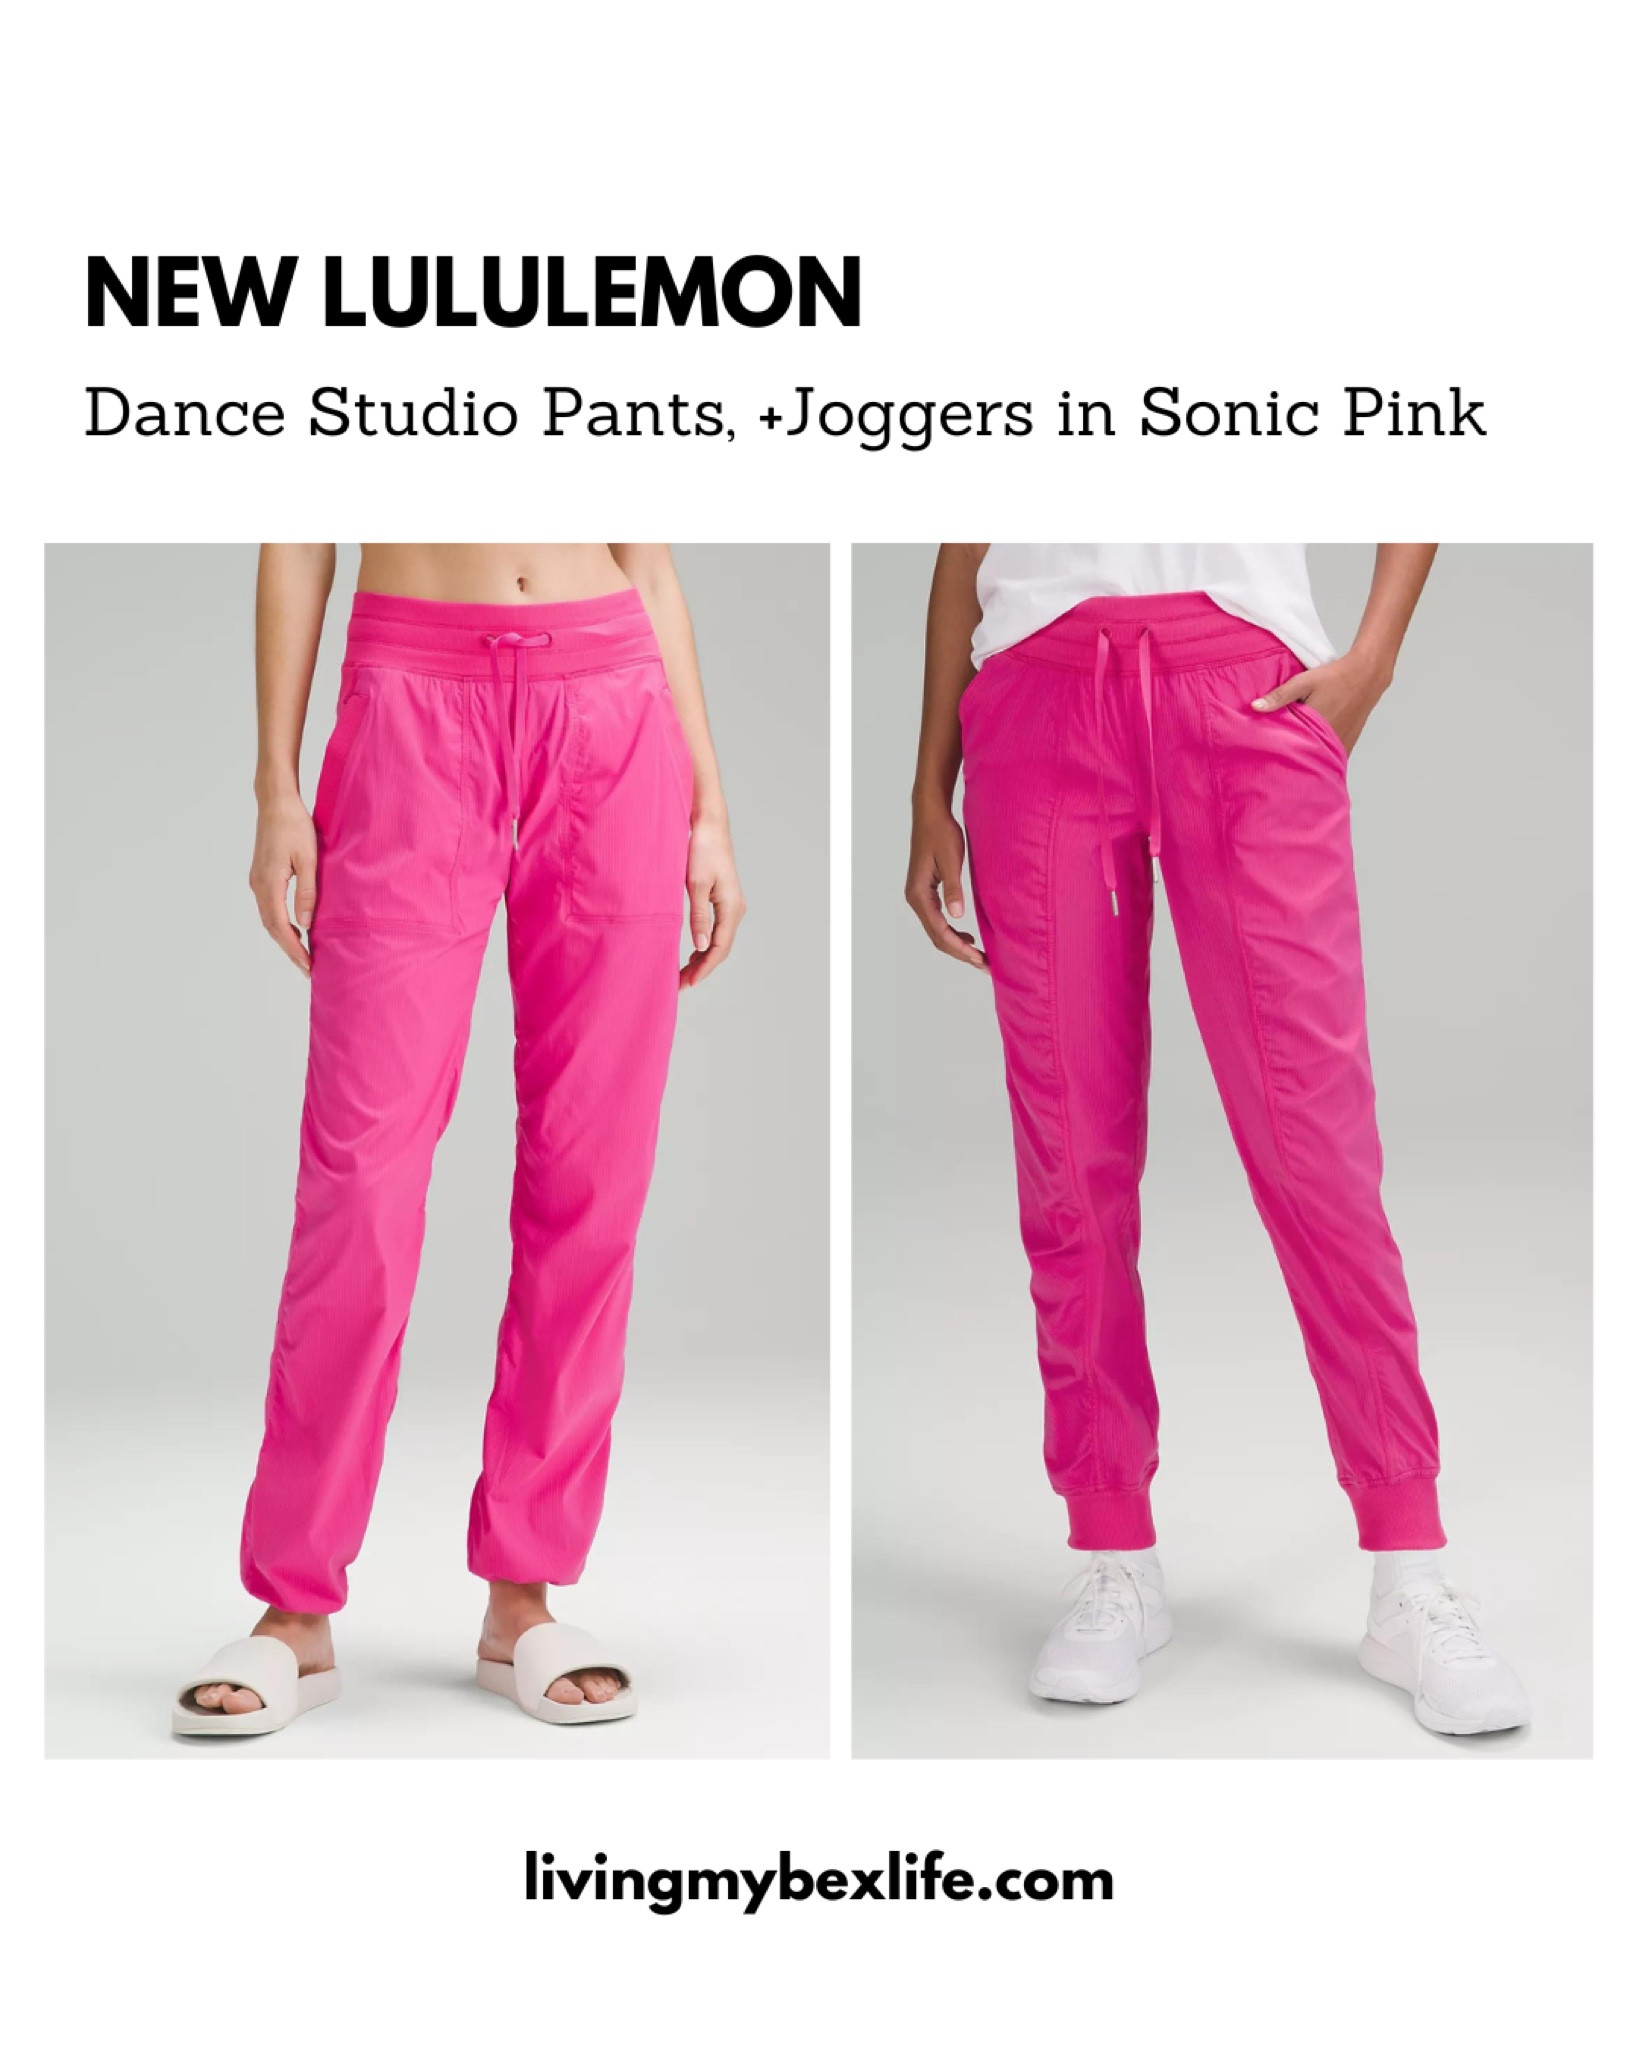 Thx @lululemon #foryoupage #dancestudiopants #sonicpink #lululemon #fy